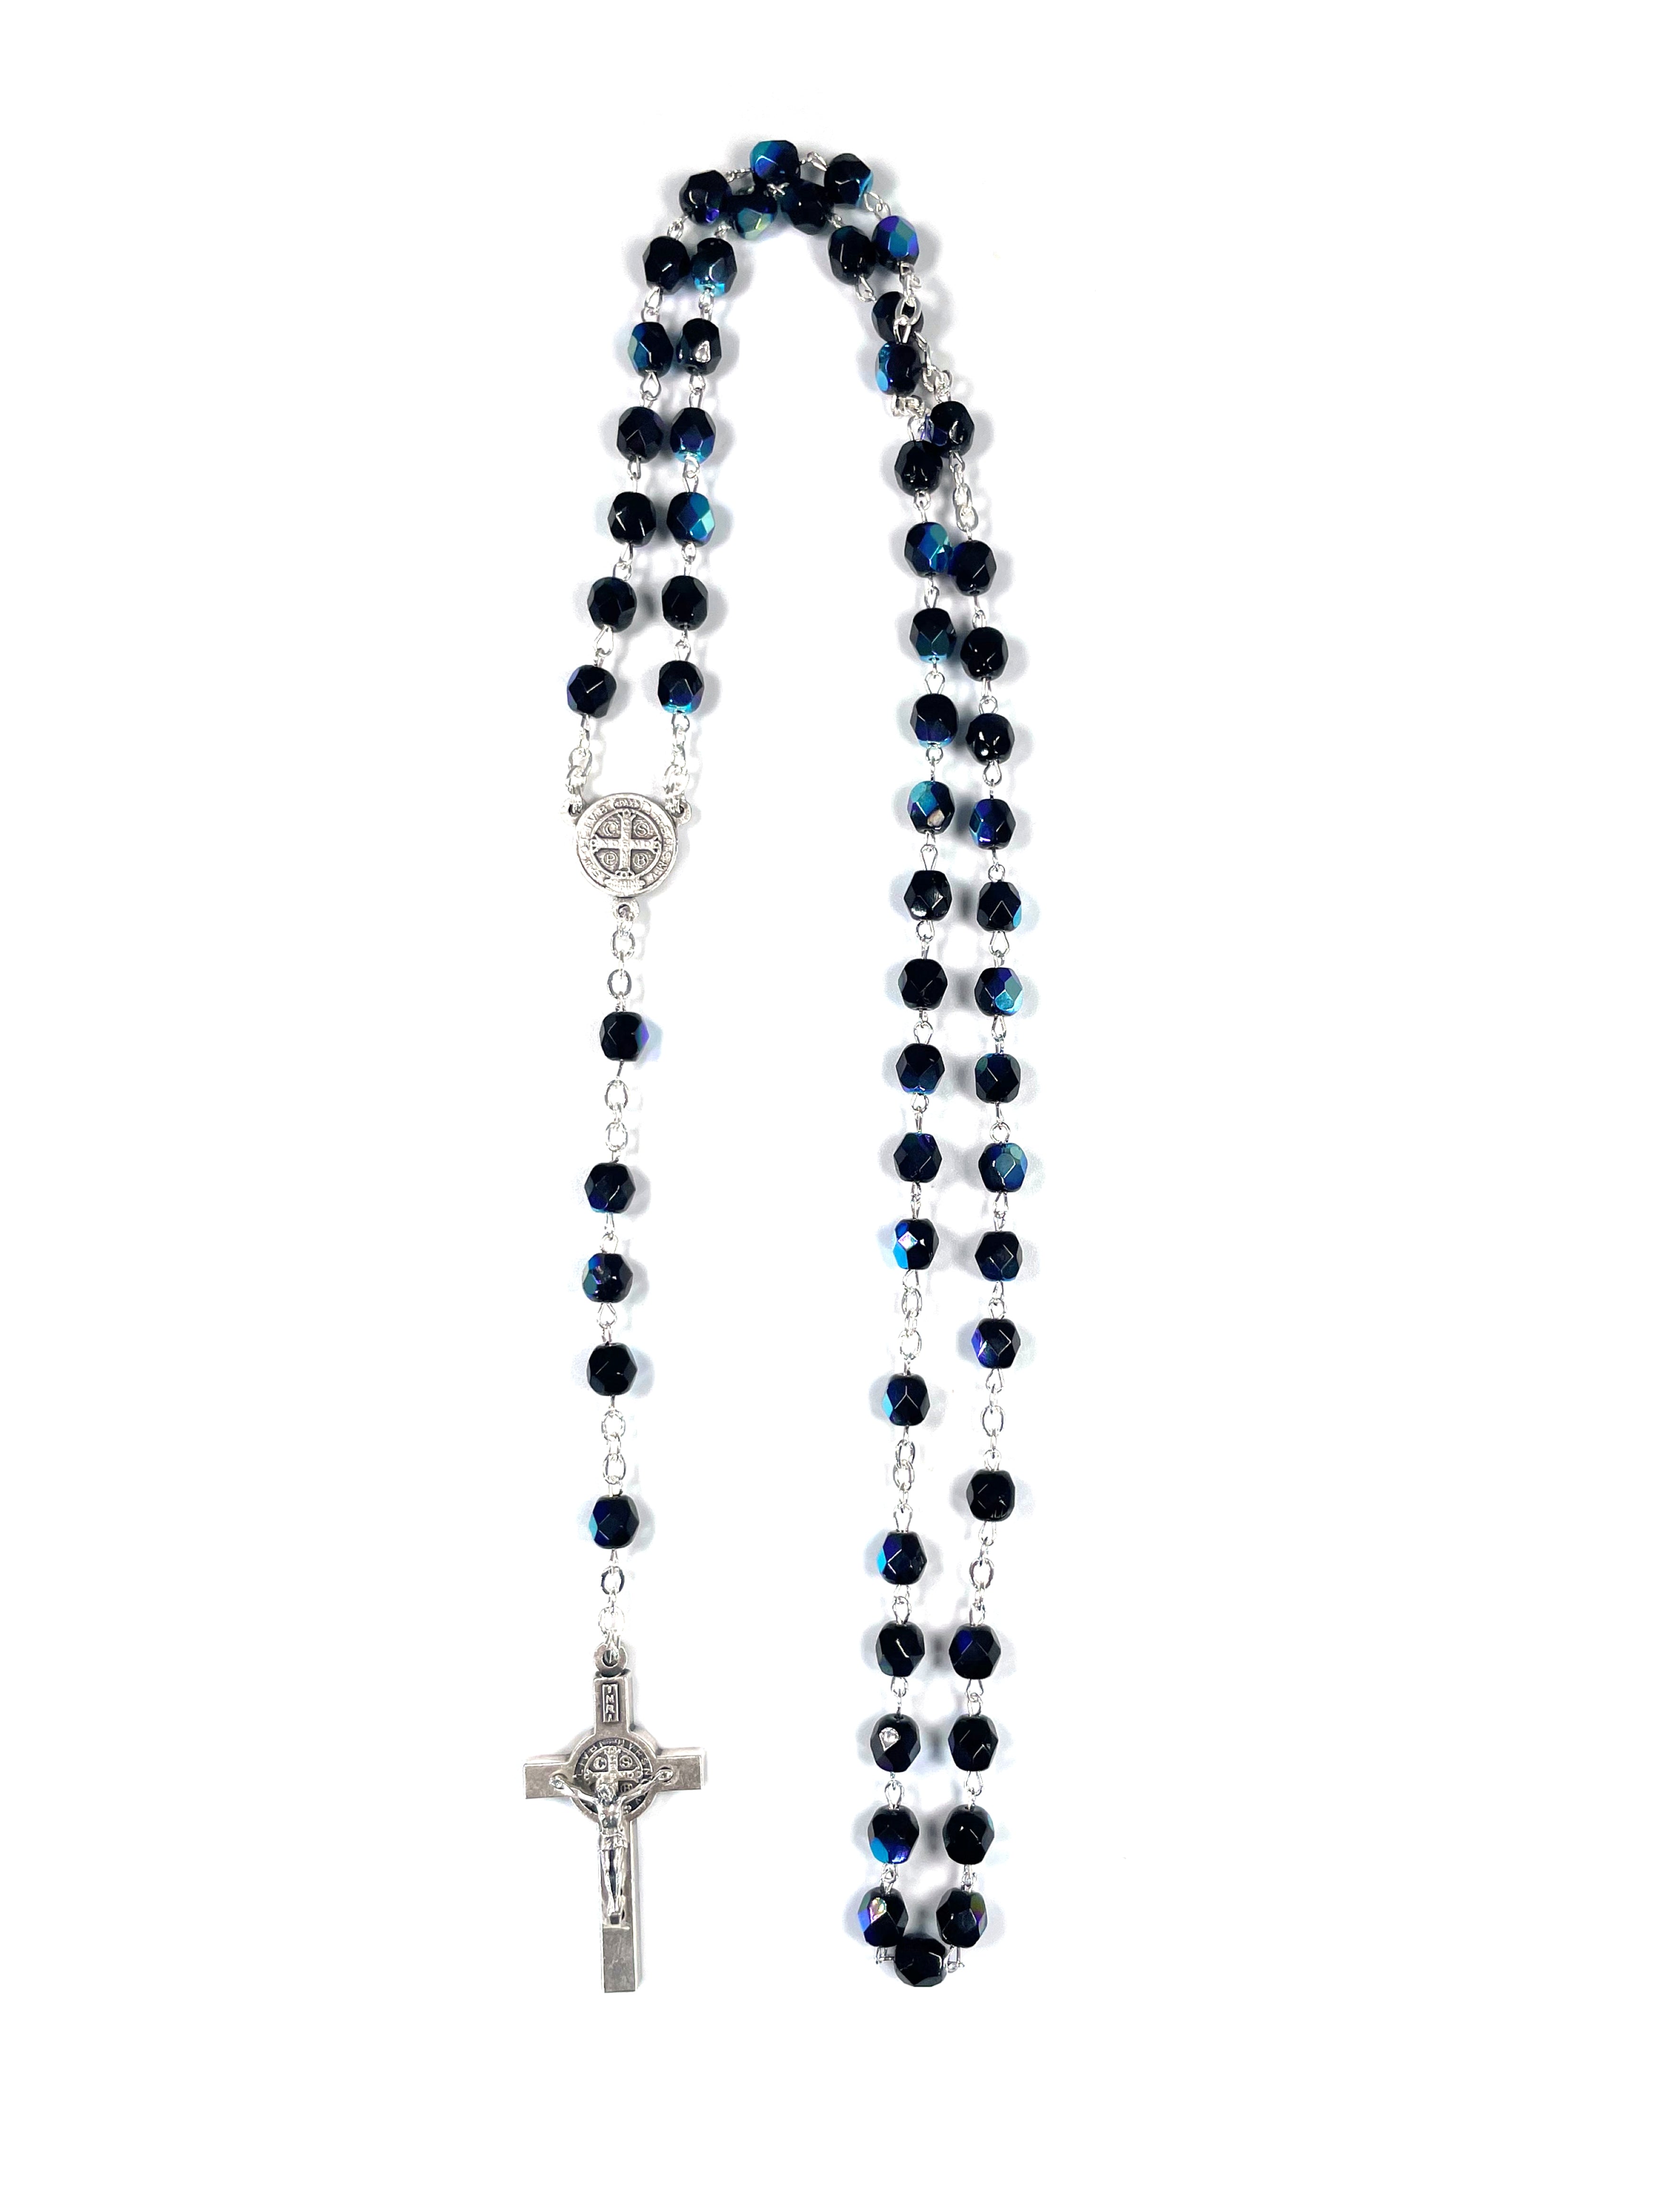 Iridescent black color Saint Benedict rosary